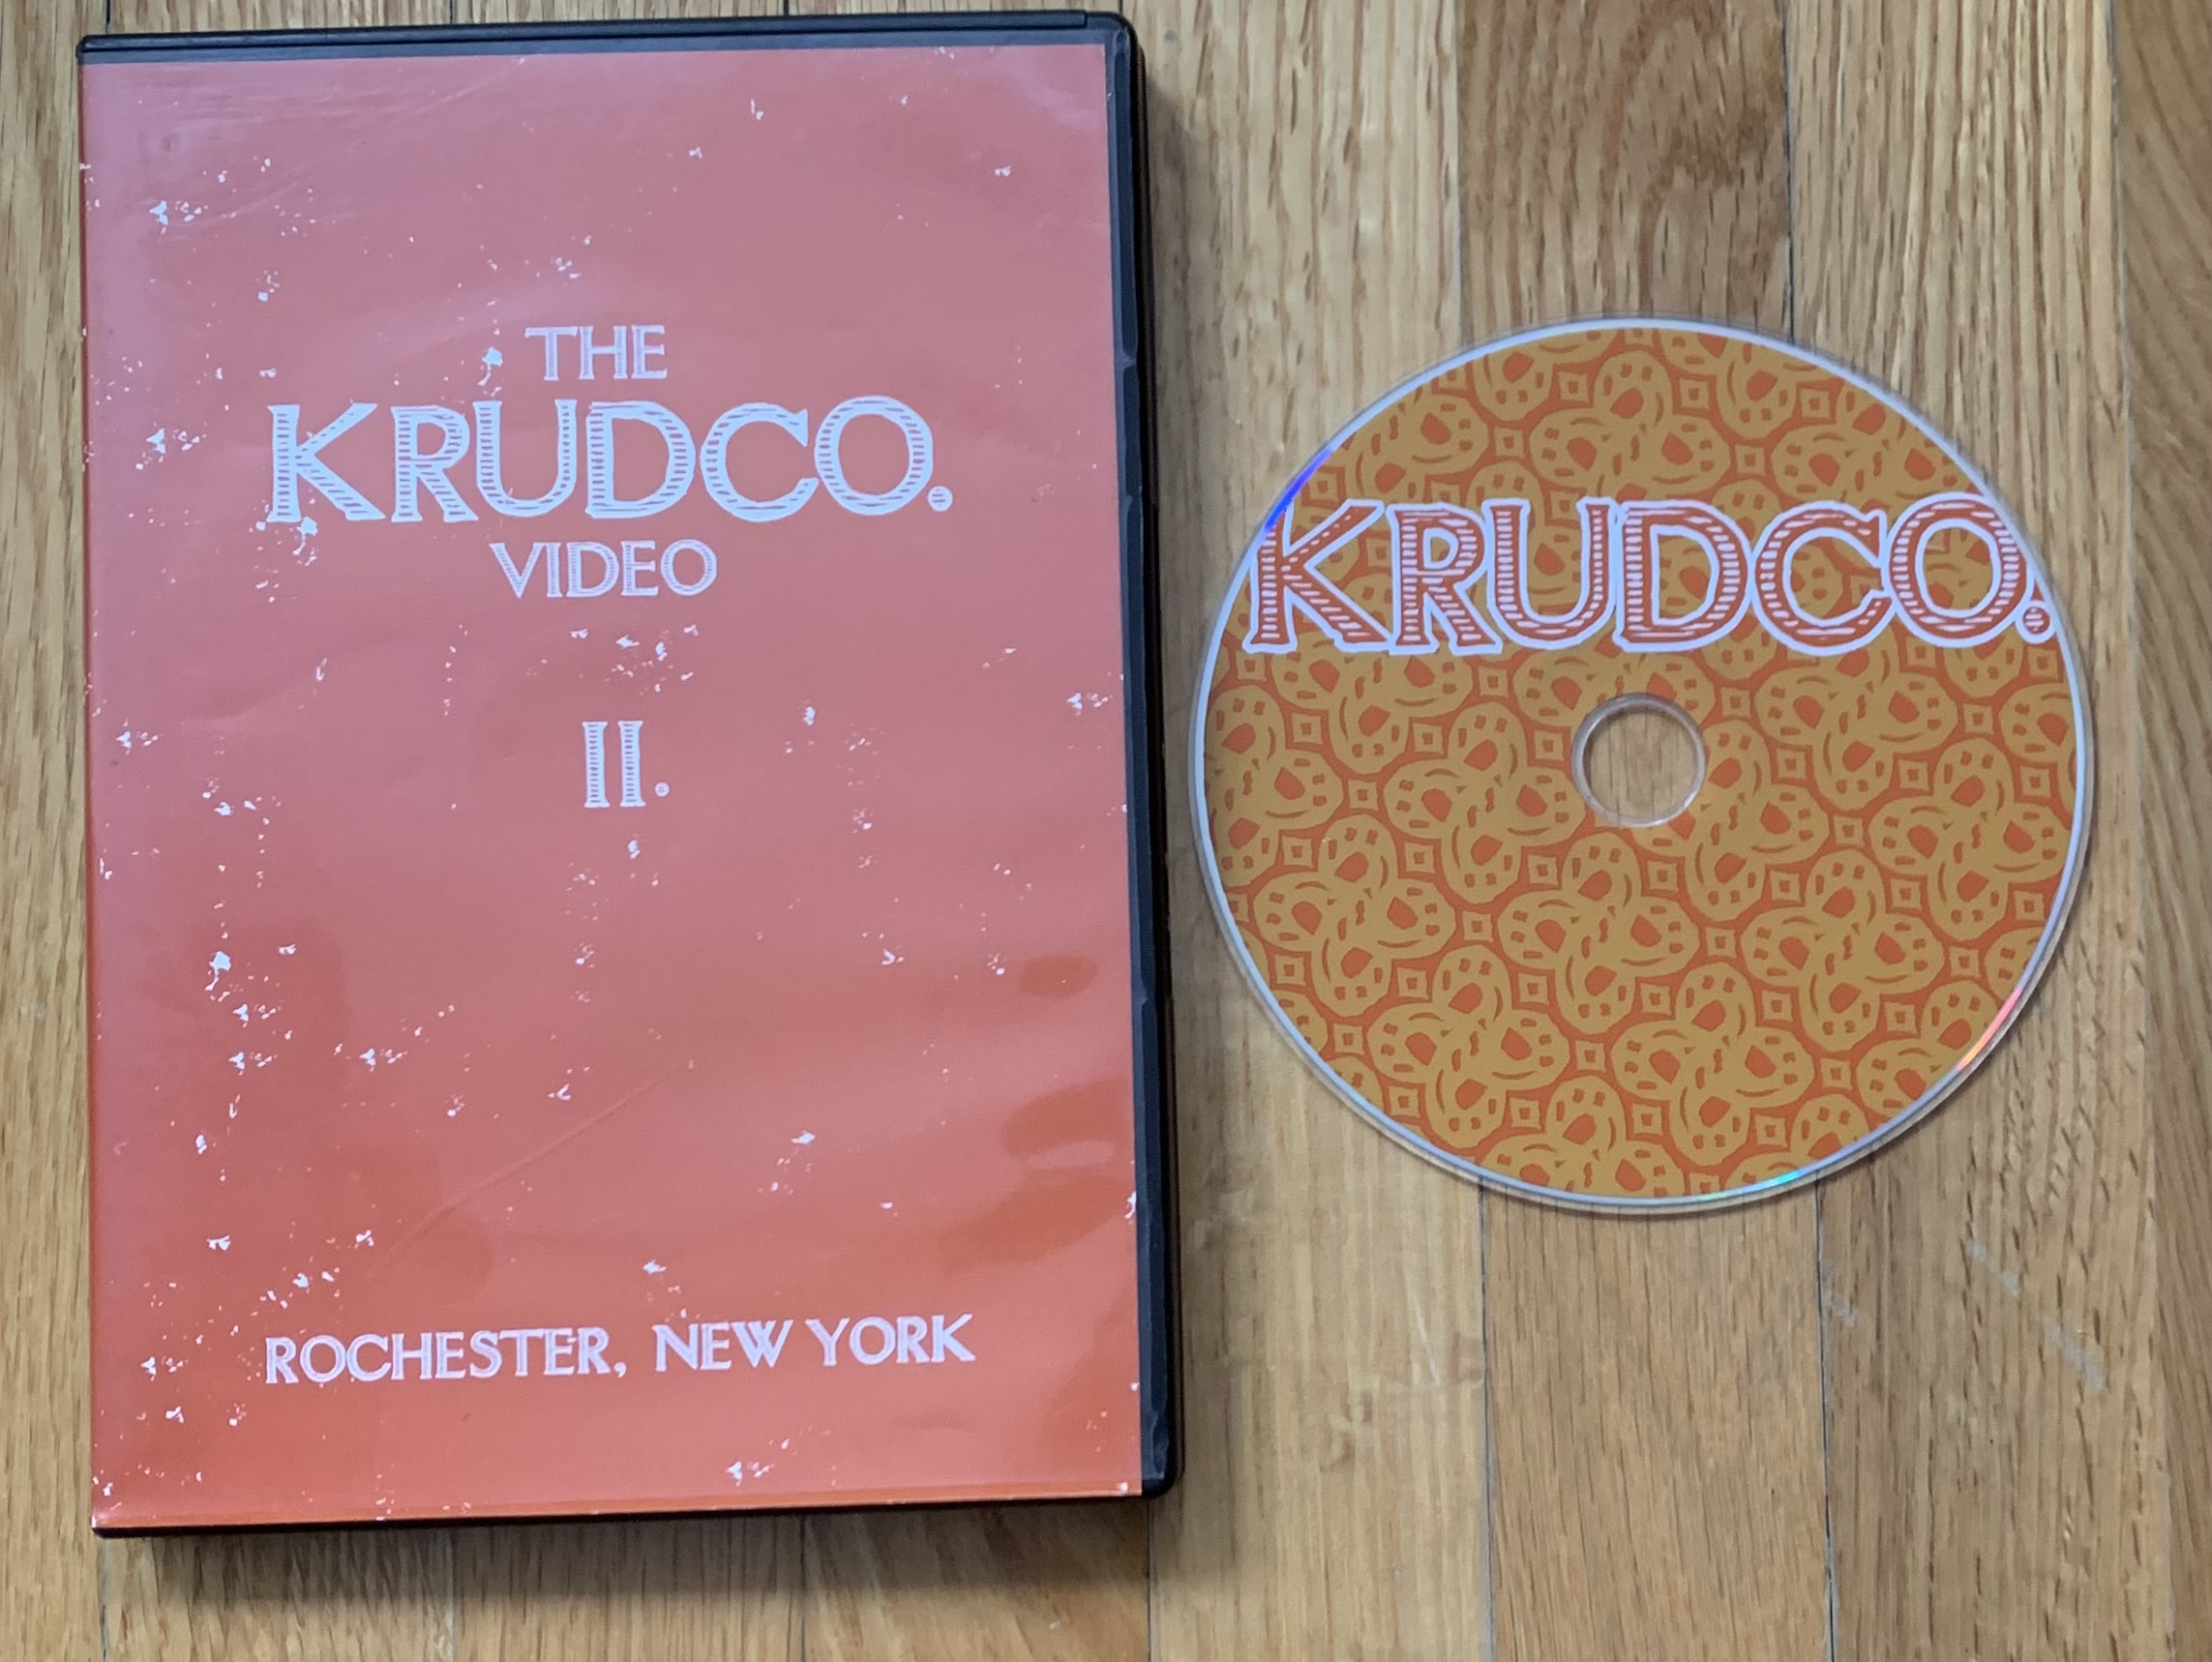 Krudco - Video II, The Orange Video cover